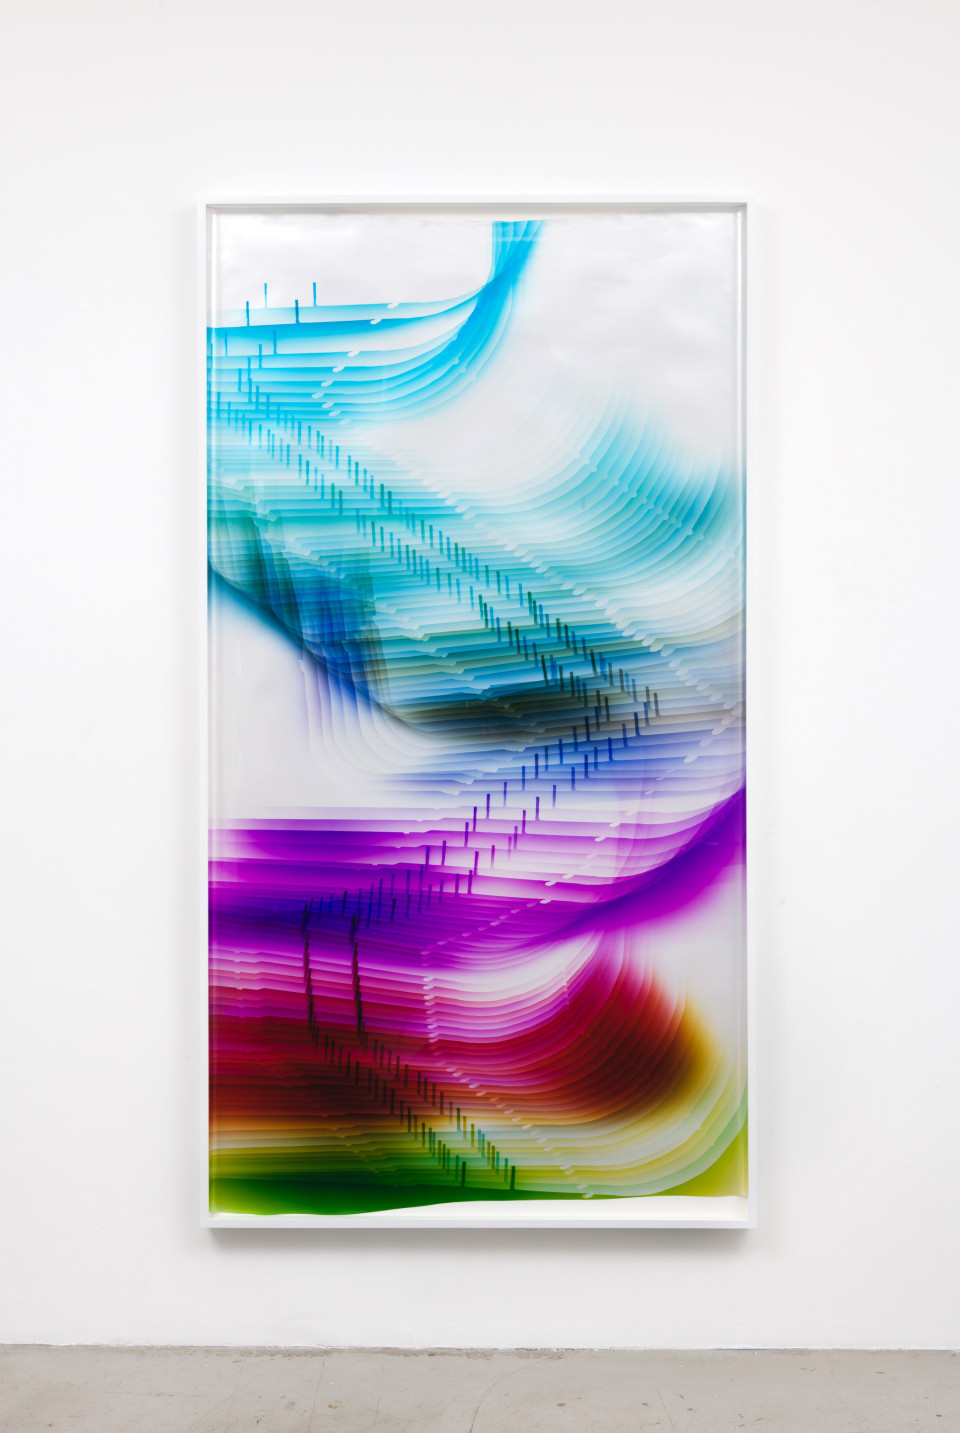 Image: Mariah Robertson  226, 2017  unique chromogenic print  91 x 49 inches (231.1 x 124.5 cm)